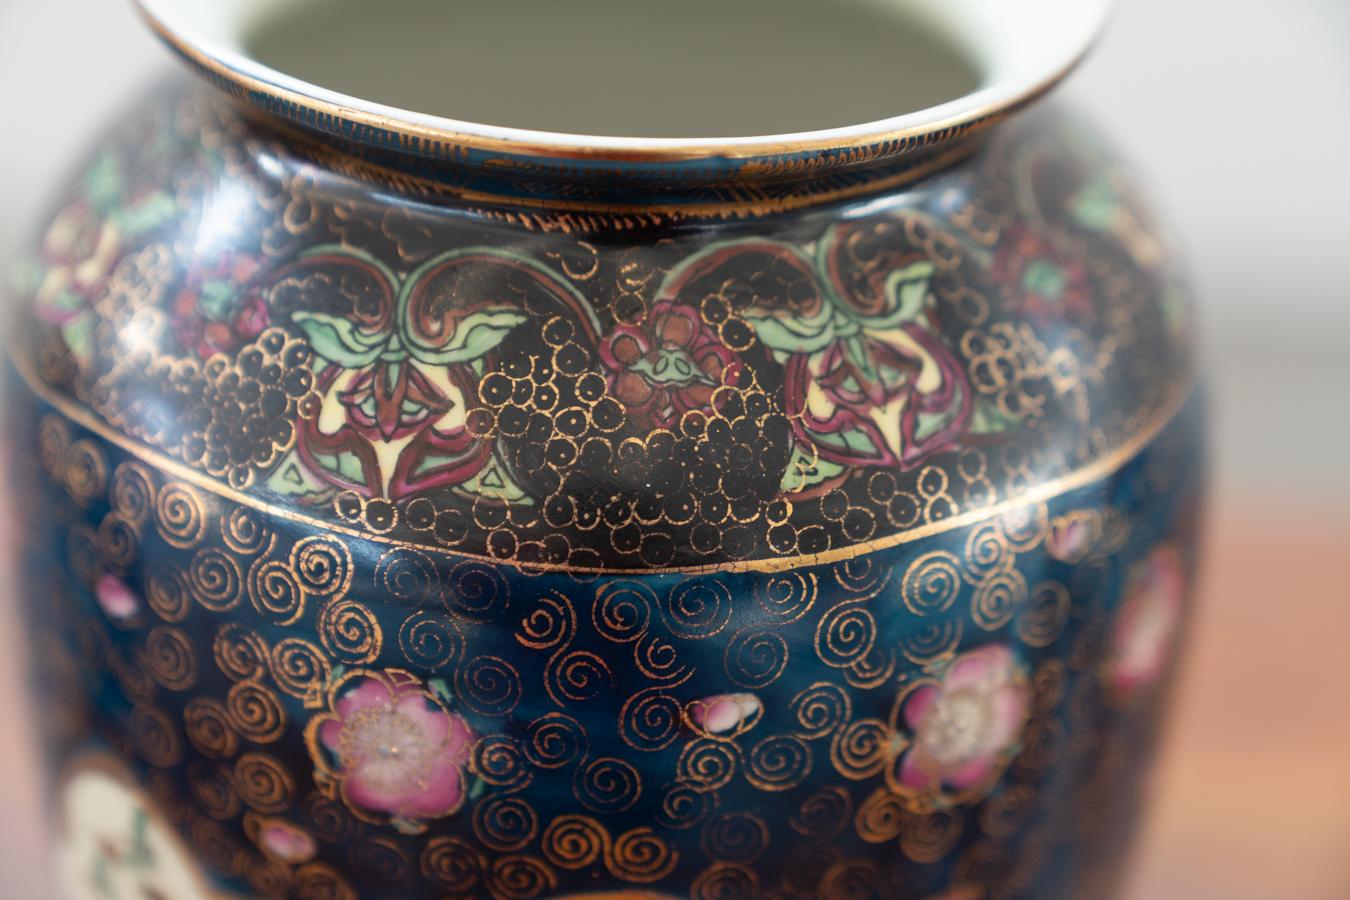 Japanese antique porcelain porcelain vases Meiji period 19th century For Sale 9